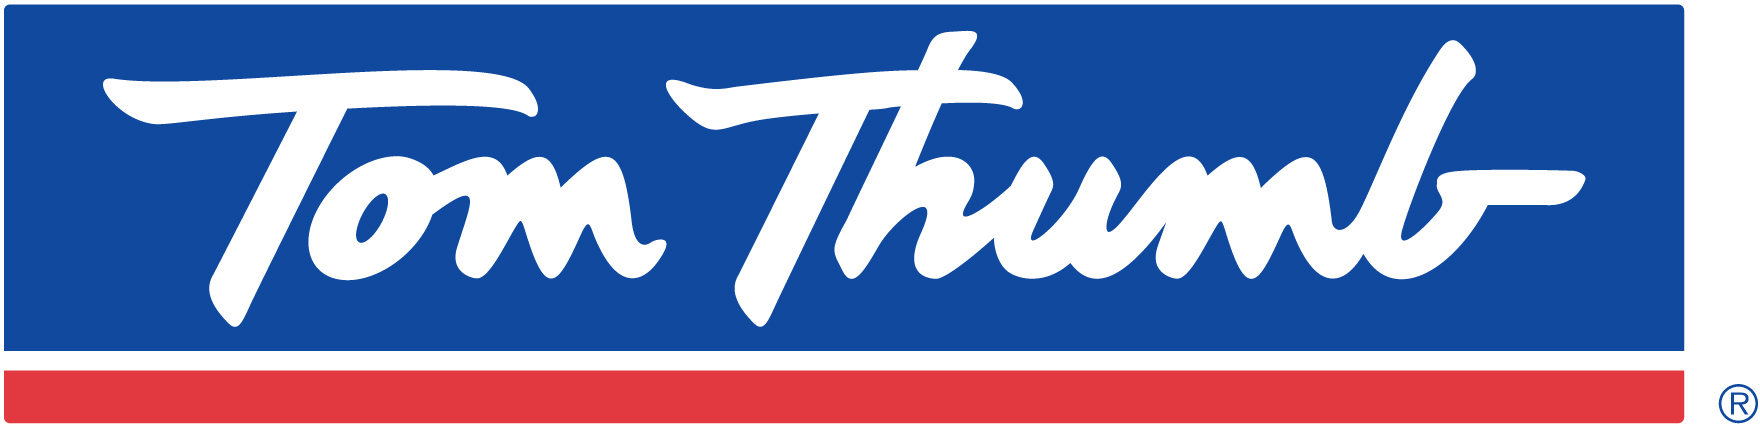 Tom Thumb Pharmacy Discount Prescription Drug Card